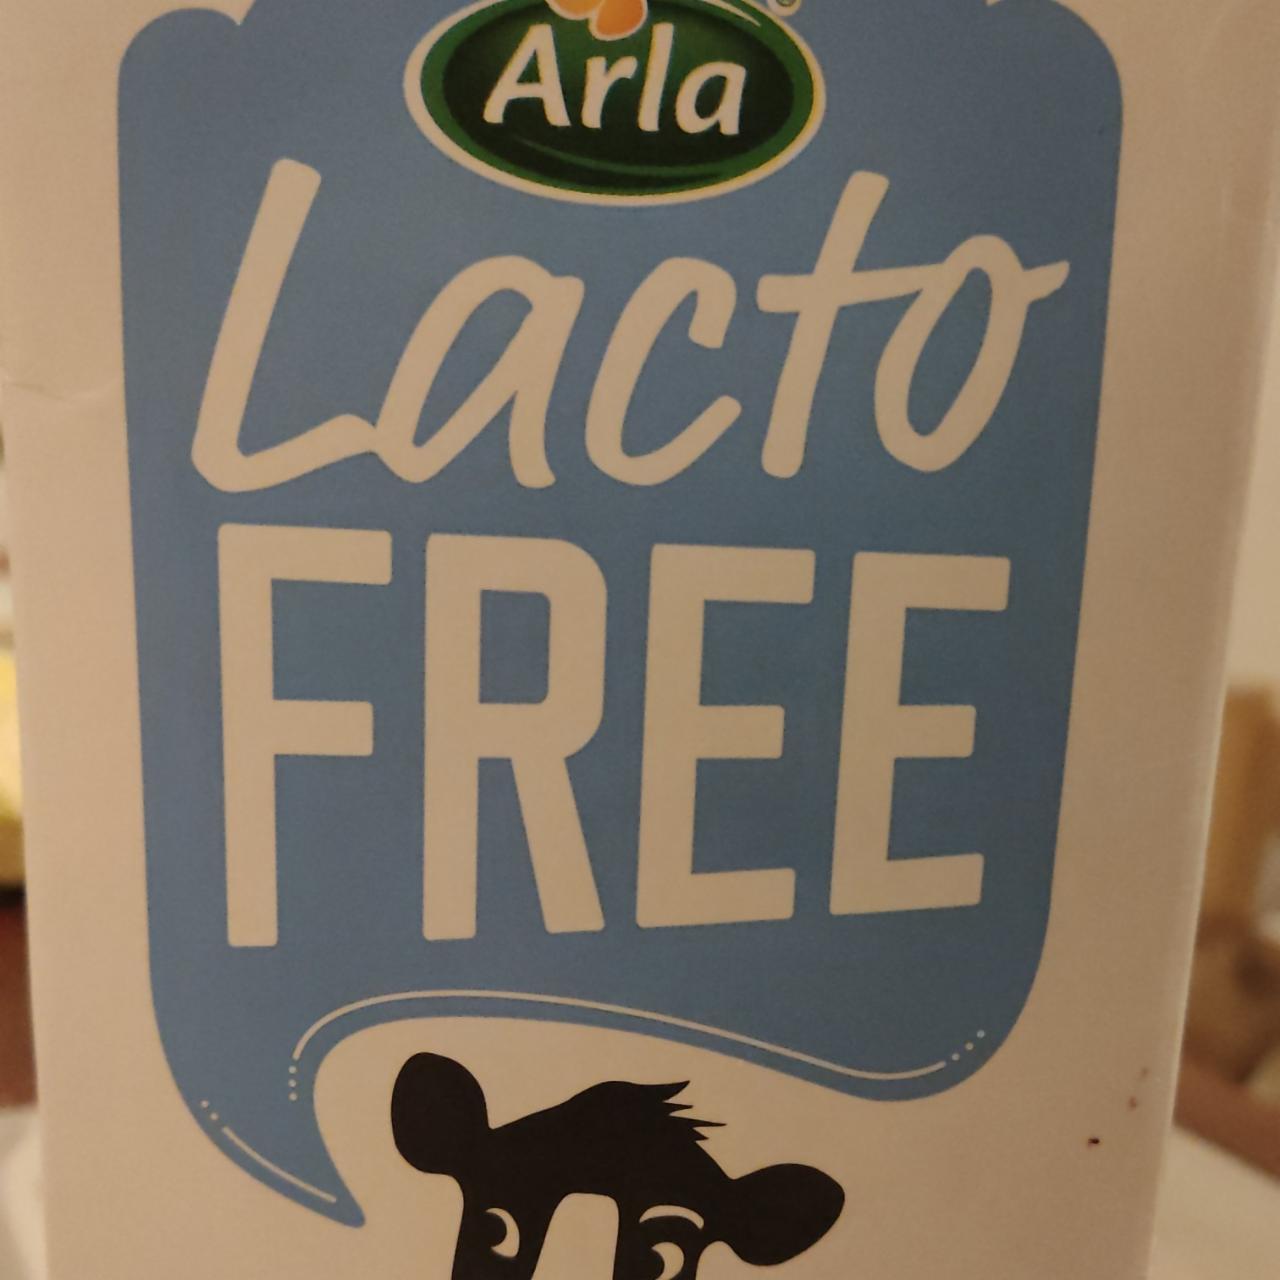 Fotografie - lacto free whole milk Arla